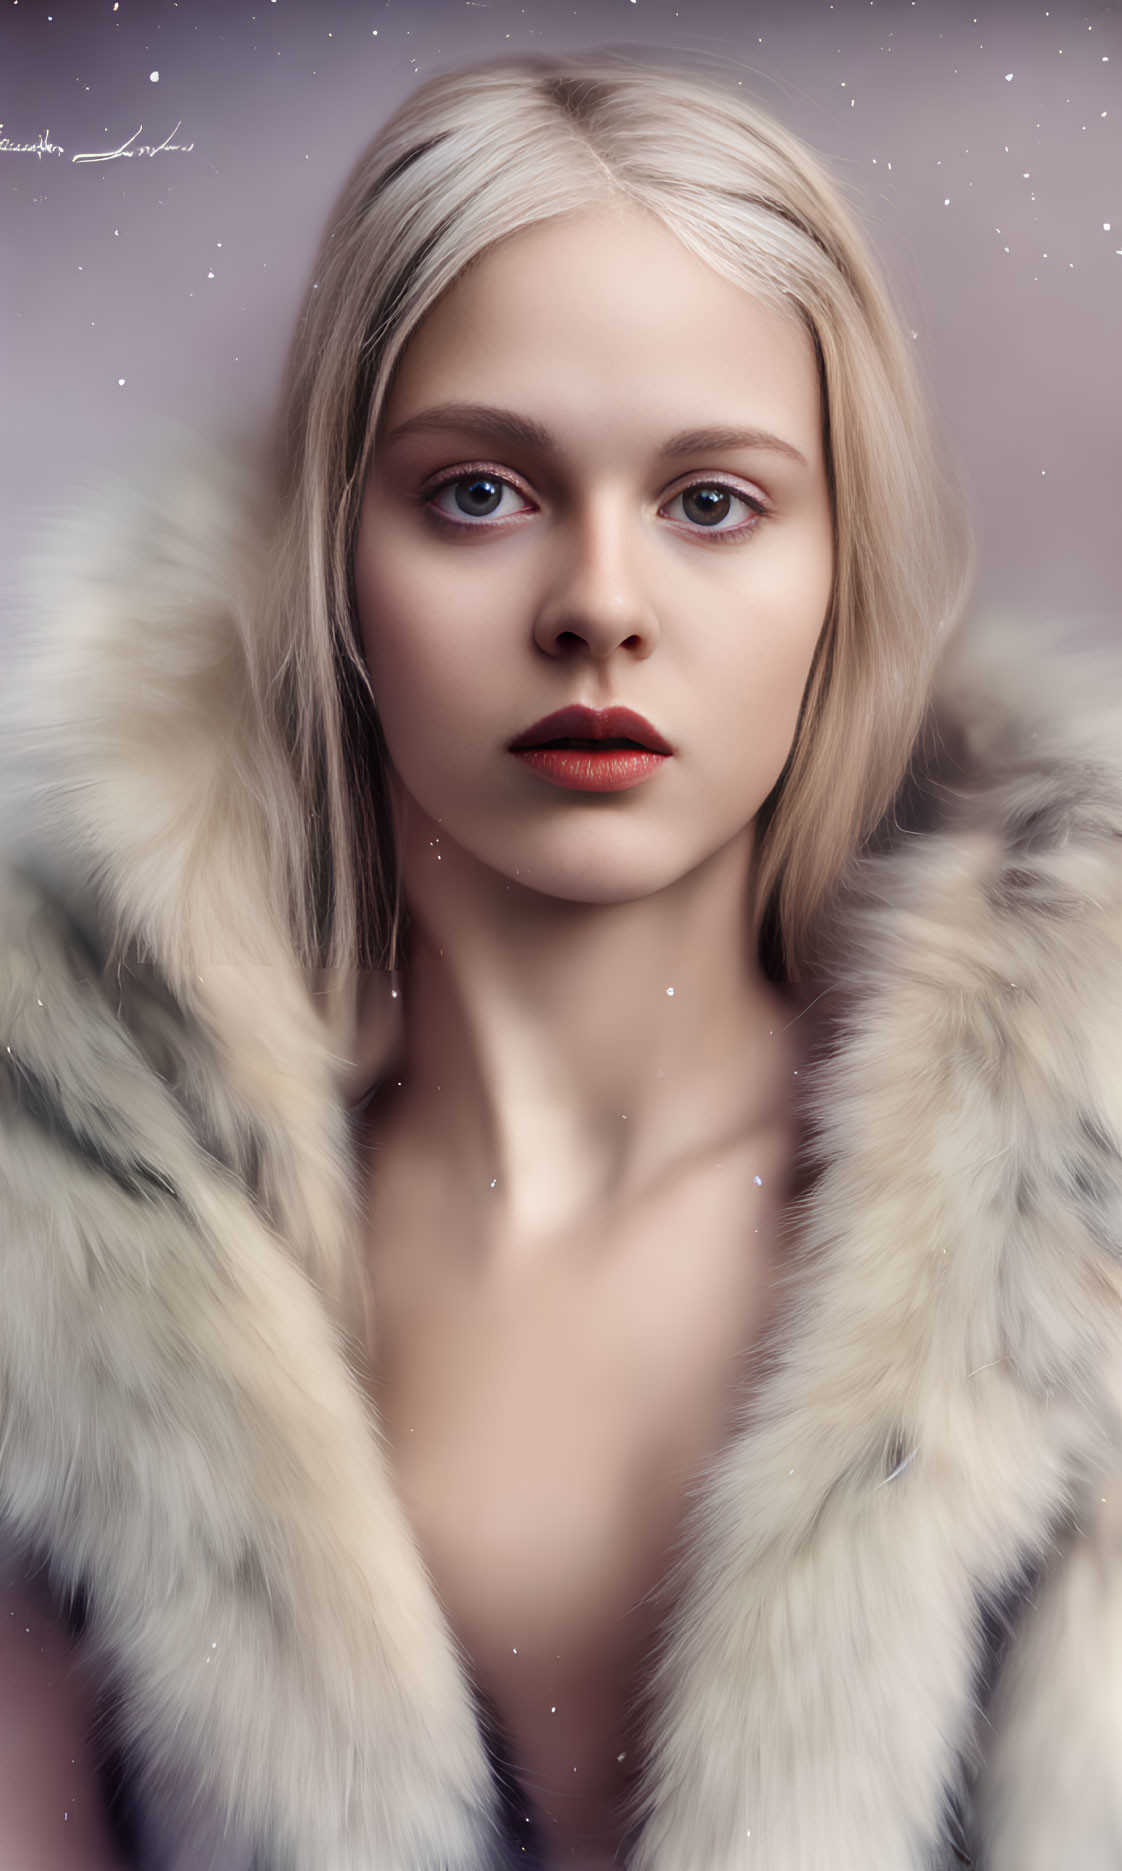 Platinum blonde hair, red lips portrait in white fur coat on soft purple background